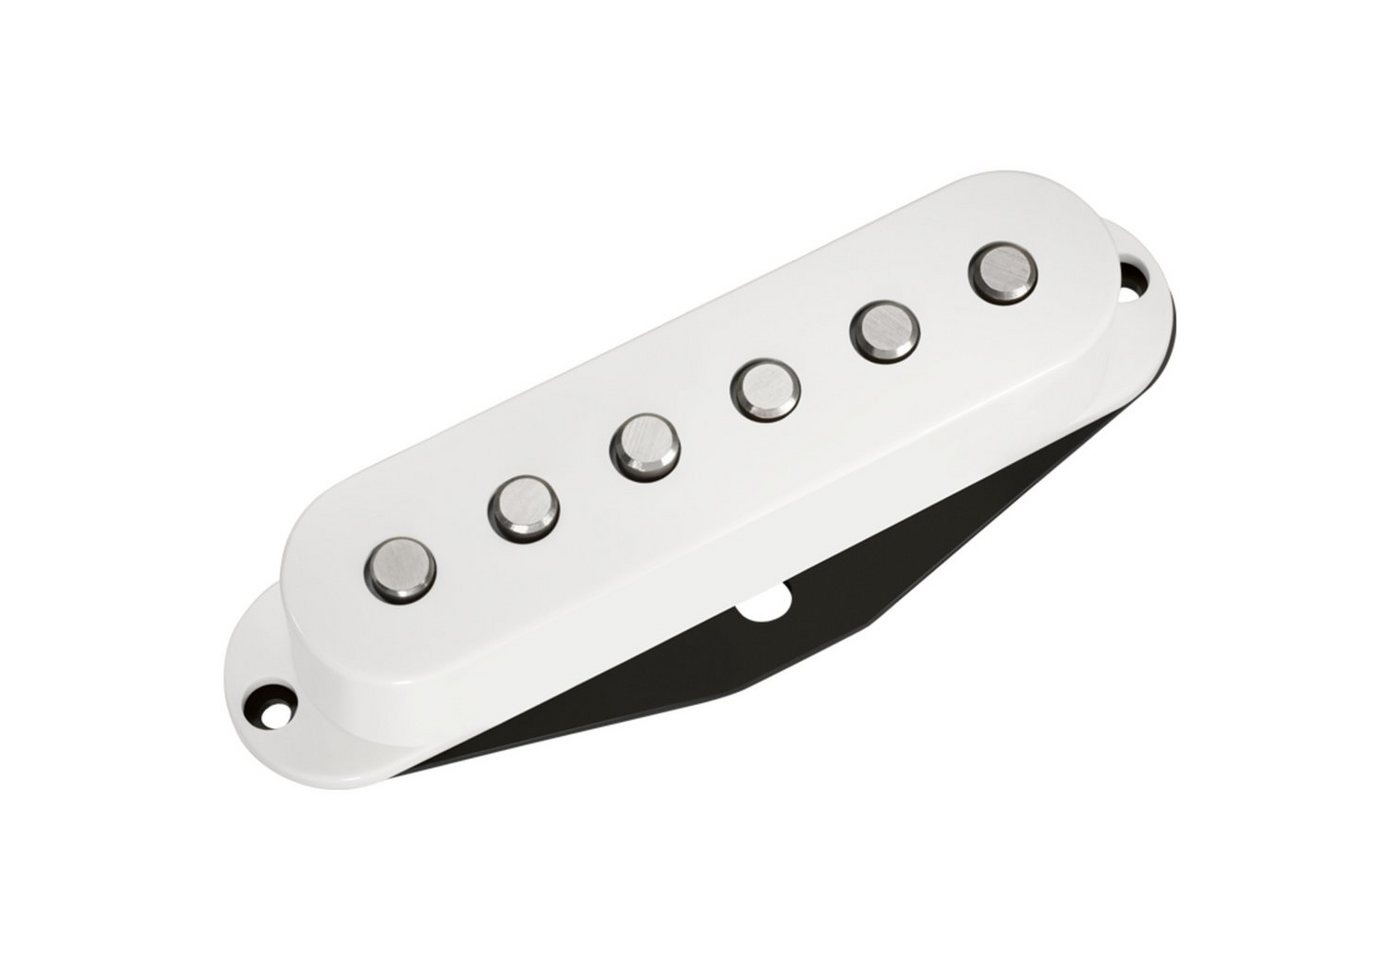 DiMarzio Tonabnehmer, (DP415 Area '58 White), DP415 Area '58 White - Single Coil Tonabnehmer für Gitarren von DiMarzio